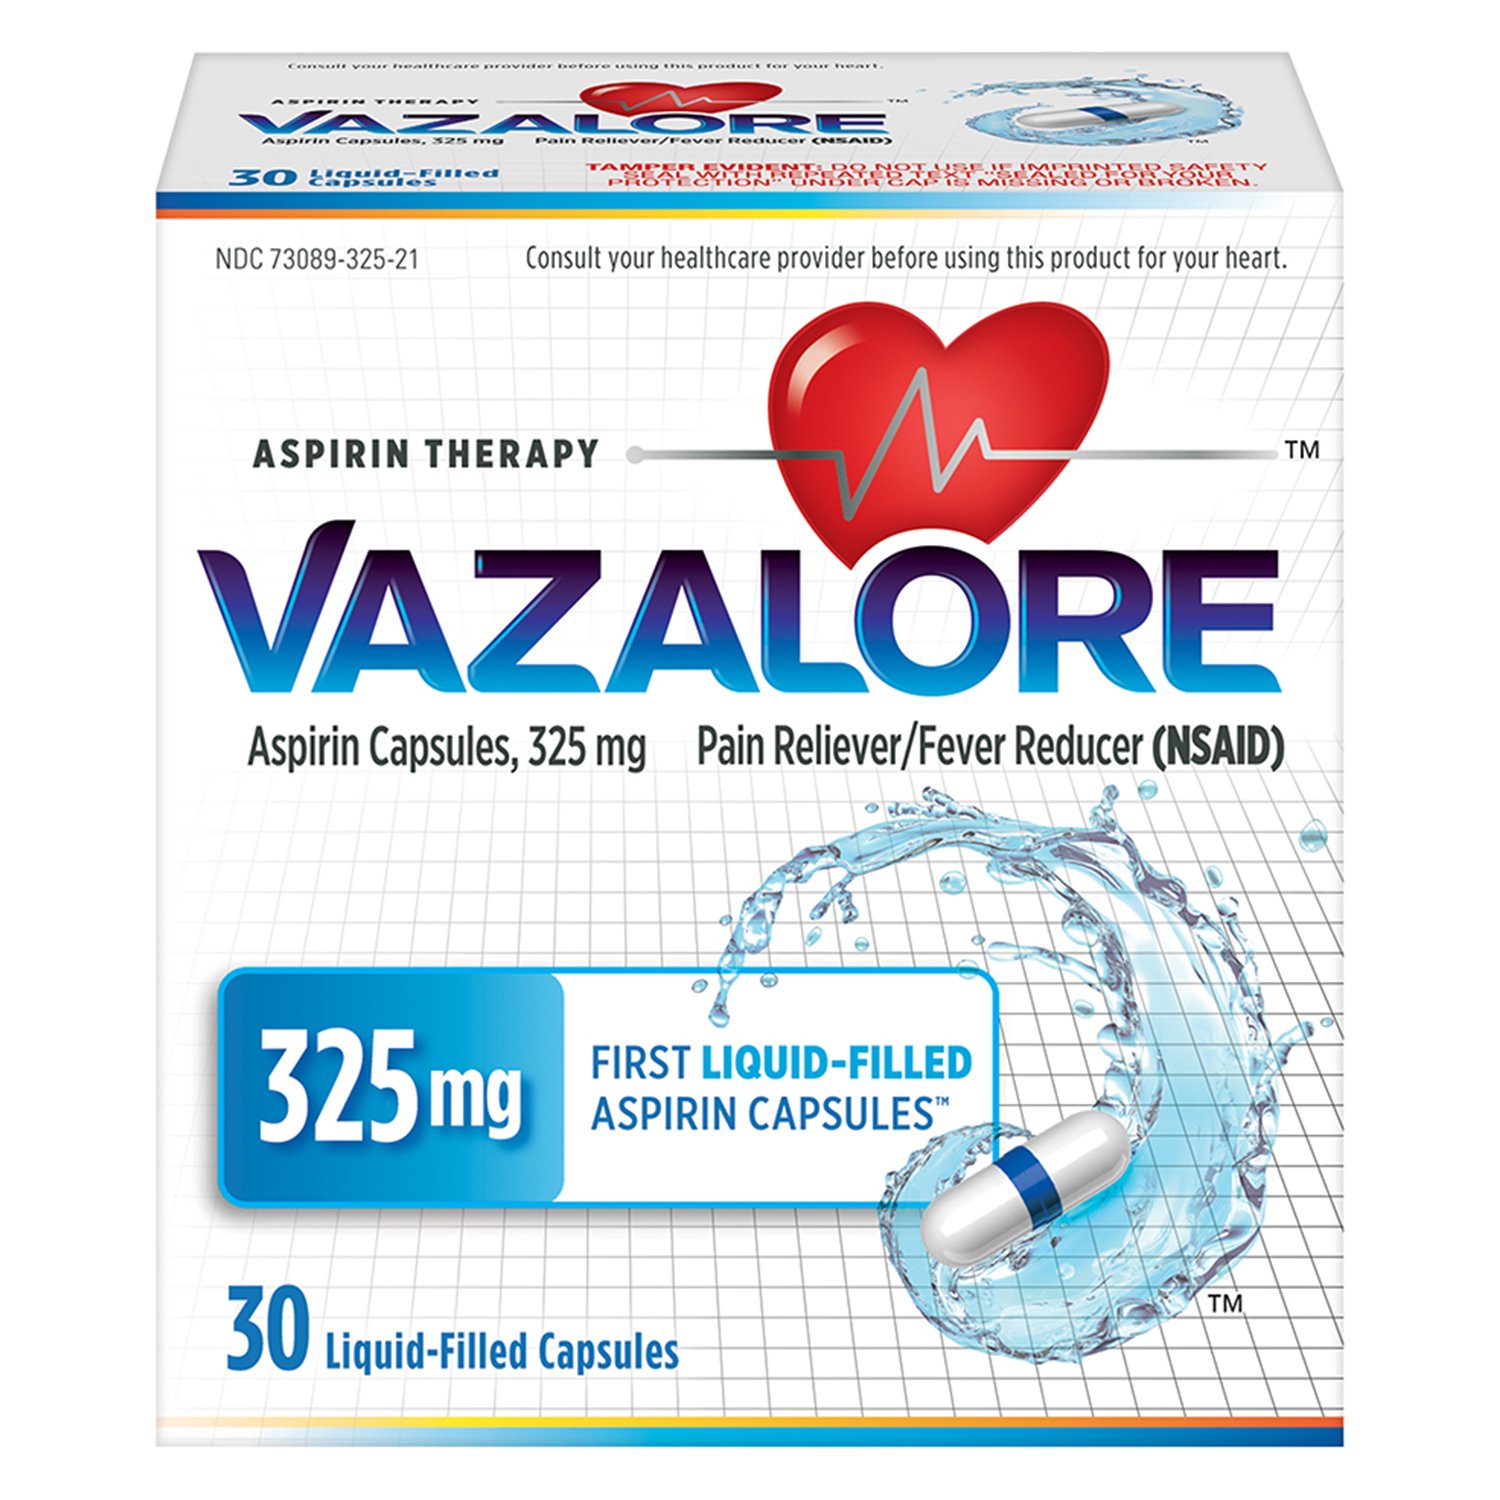 VAZALORE Aspirin Capsules